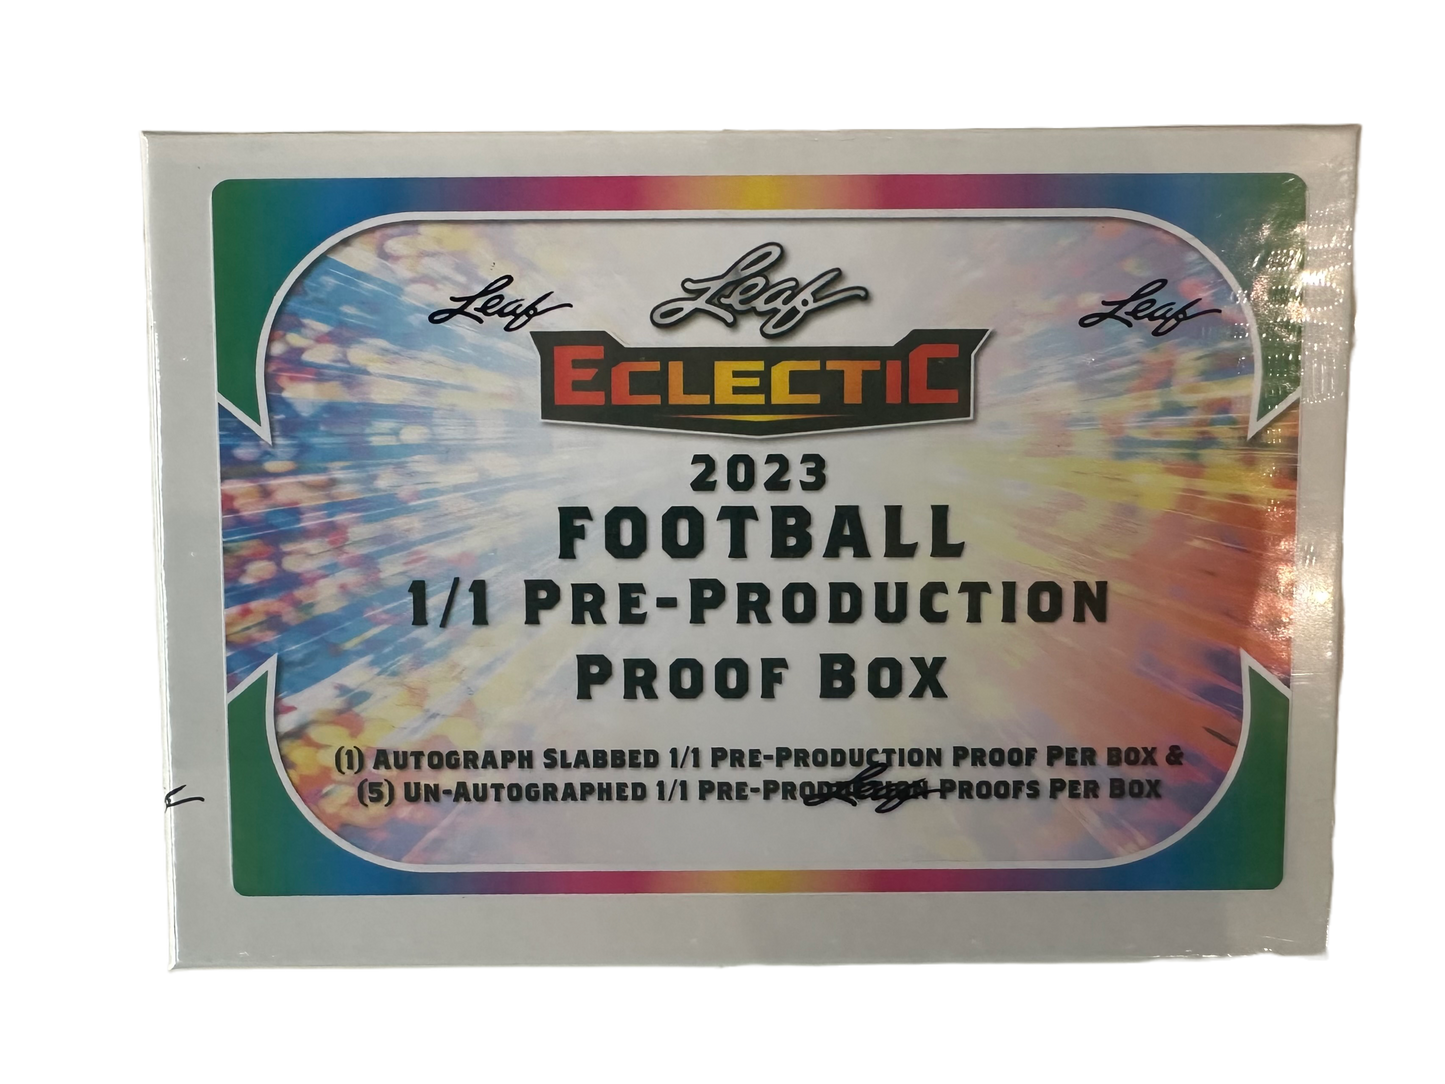 2023 Eclectic Football Proof Box- (5) Un-Signed Proofs Per Box (1) Signed Proof Per Box